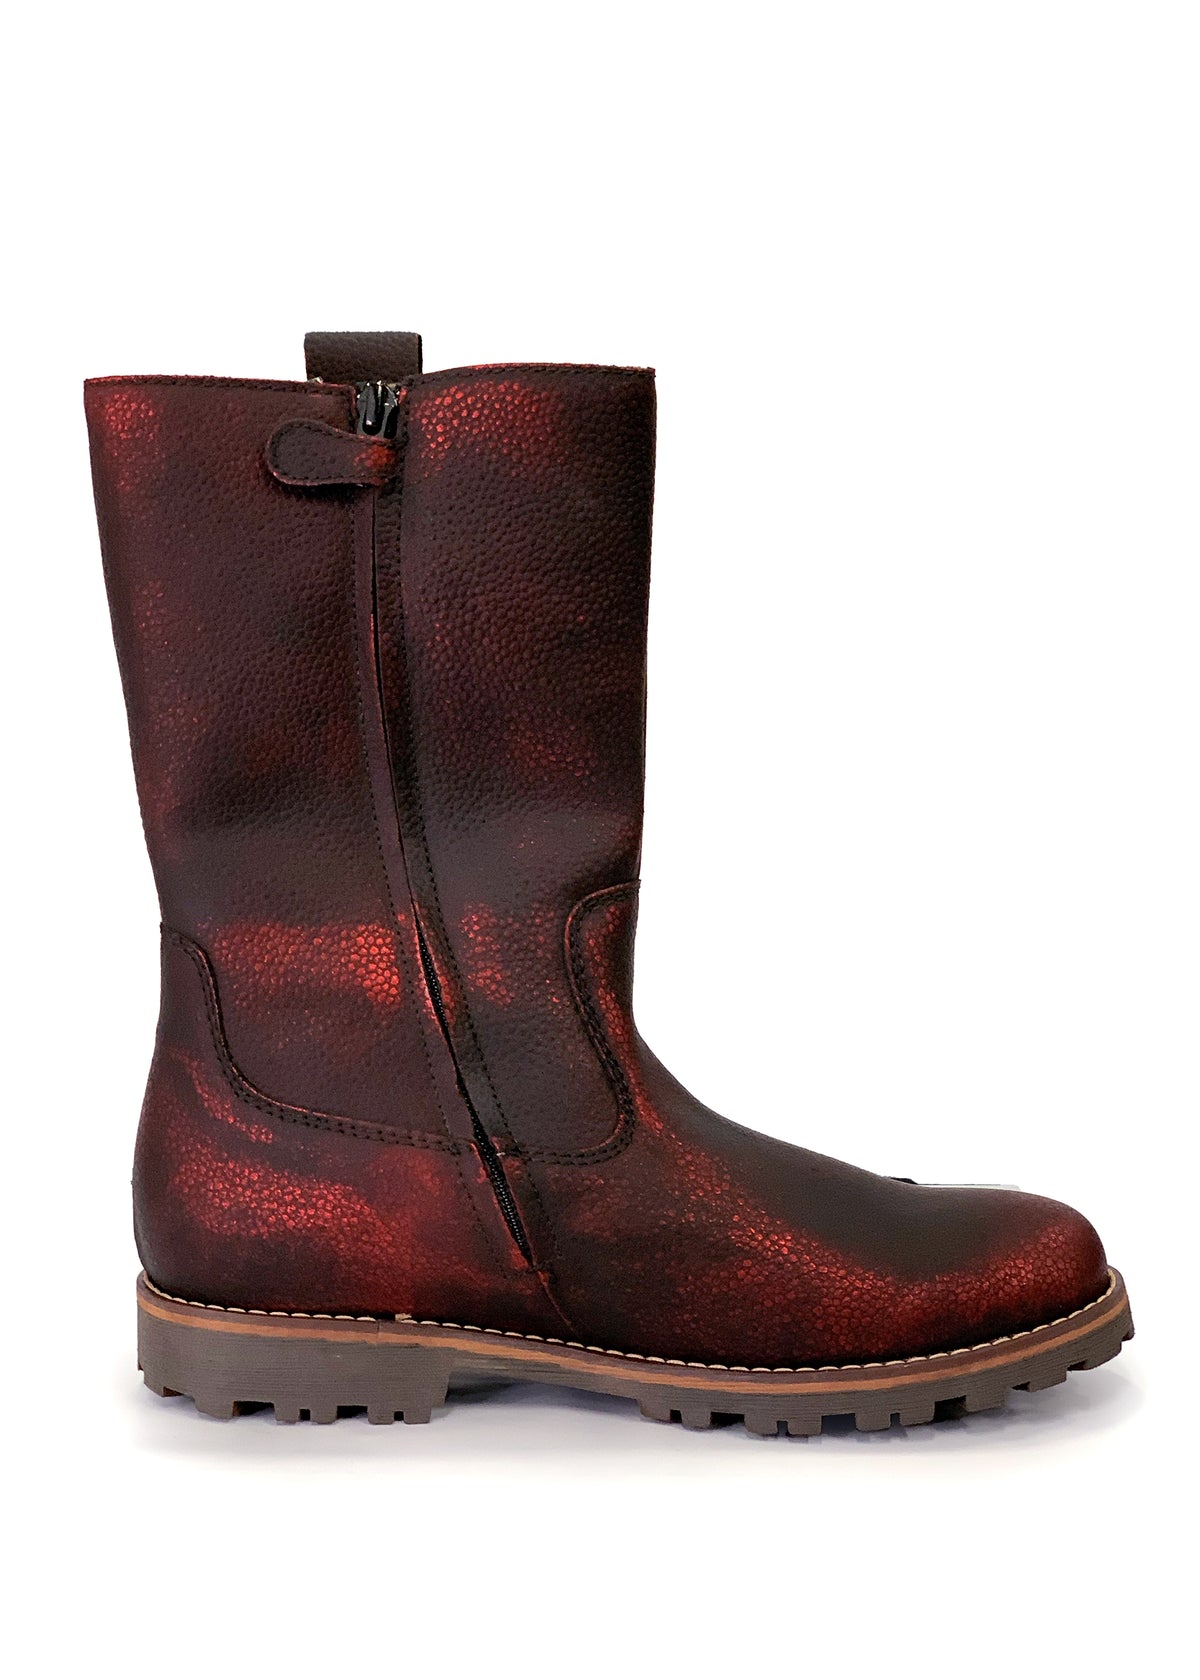 Winter boots - burgundy, Froddo-TEX